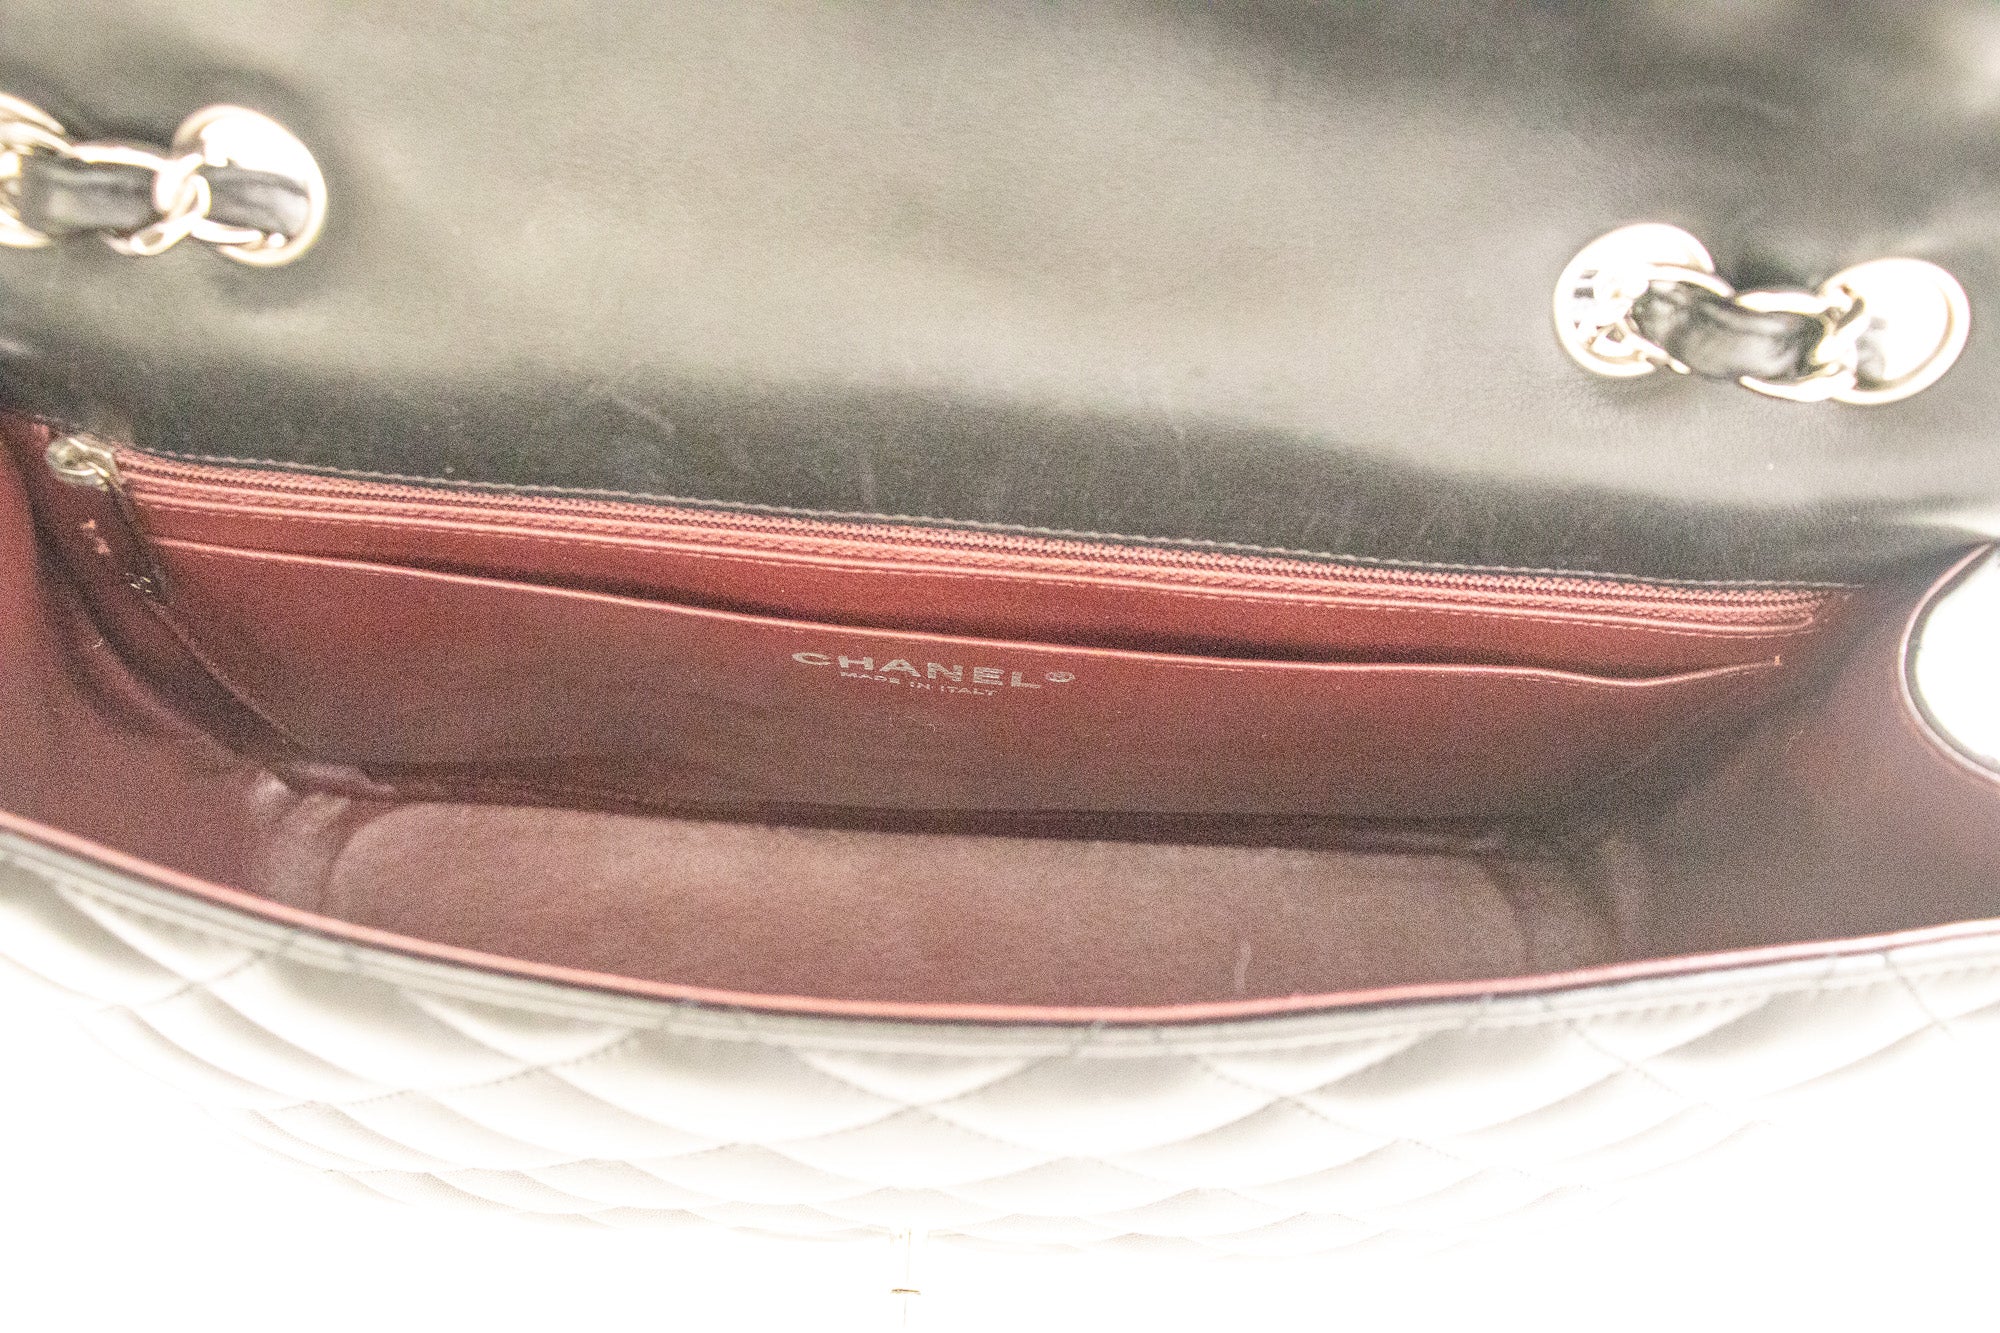 Chanel Large Classic Handbag 11Chain Shoulder Bag Flap Black Lamb h44